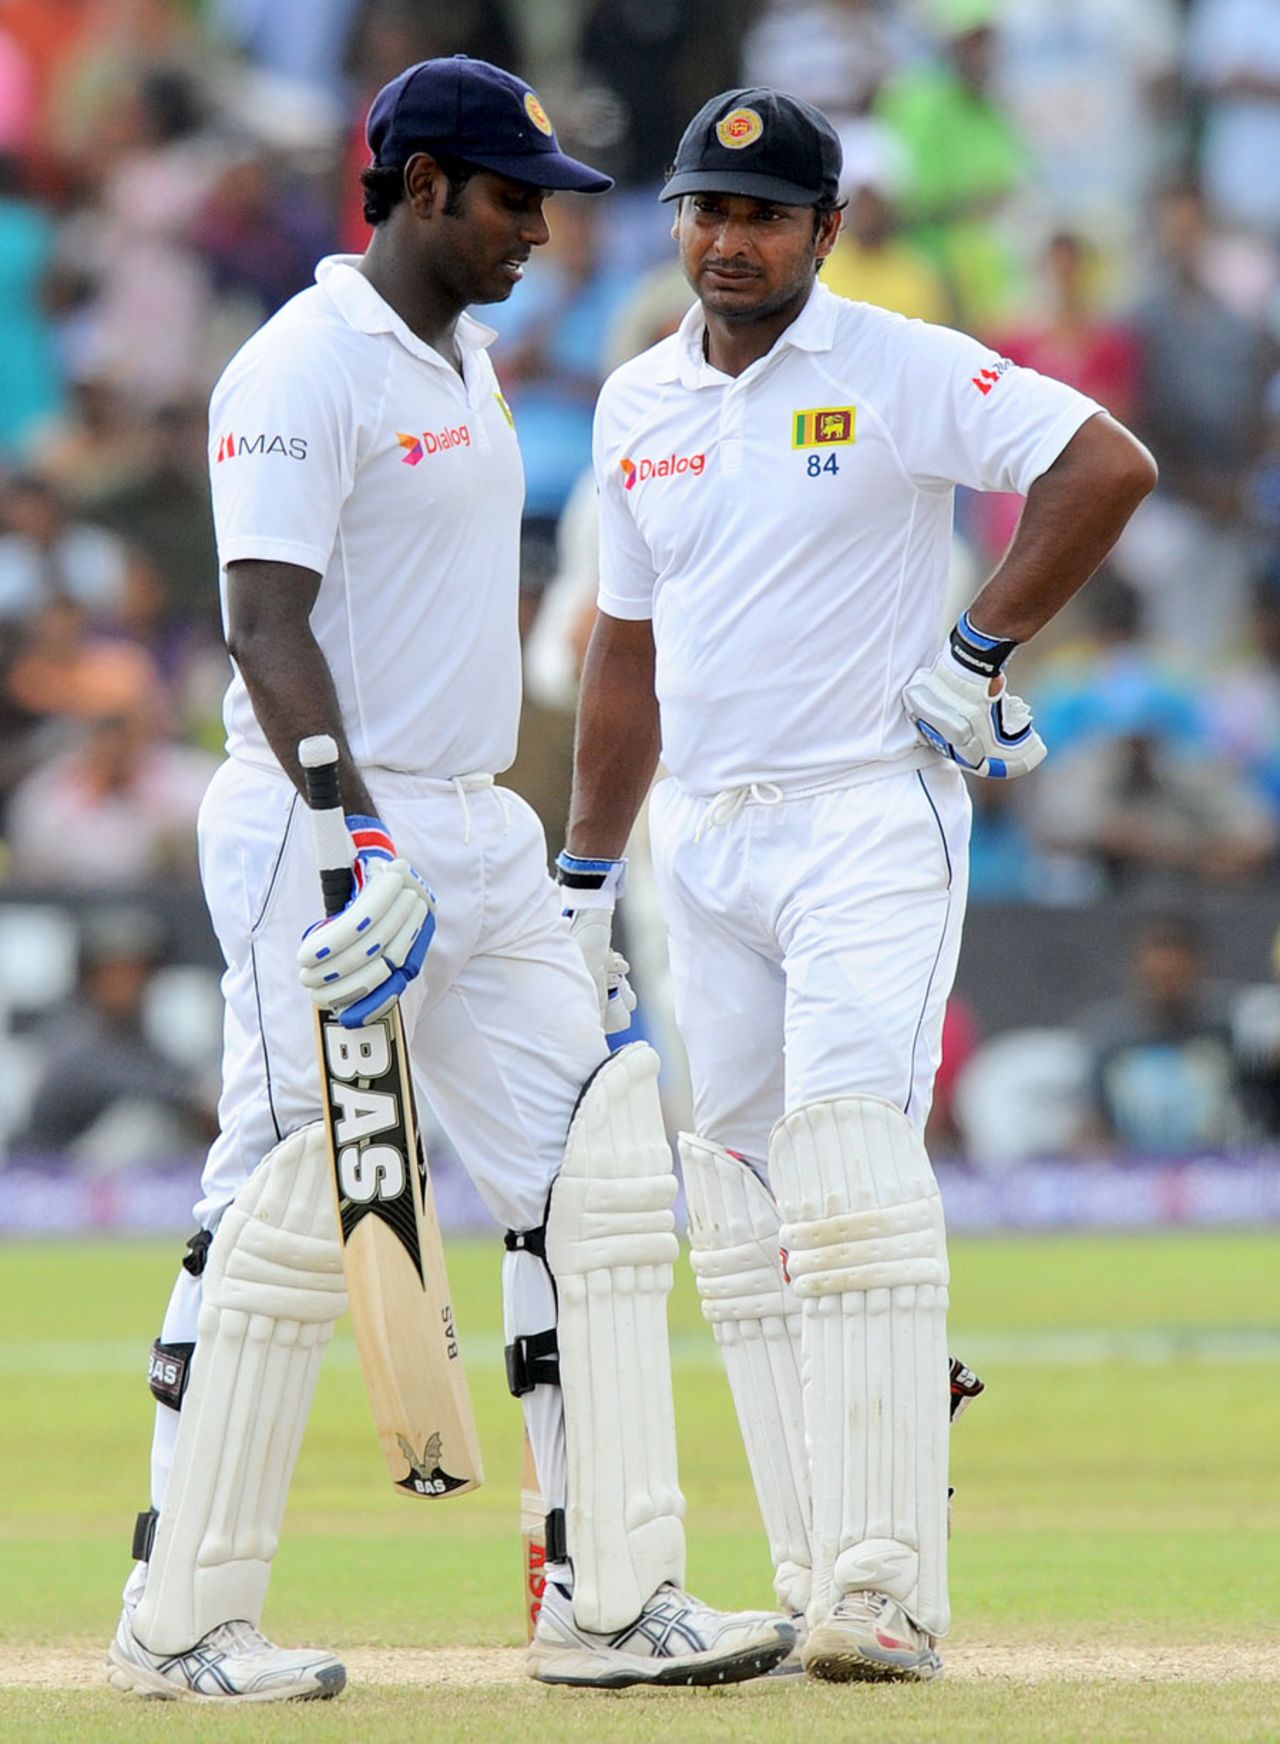 Angelo Mathews and Kumar Sangakkara added 181 for the fourth wicket, Sri Lanka v Pakistan, 1st Test, Galle, 4th day, August 9, 2014